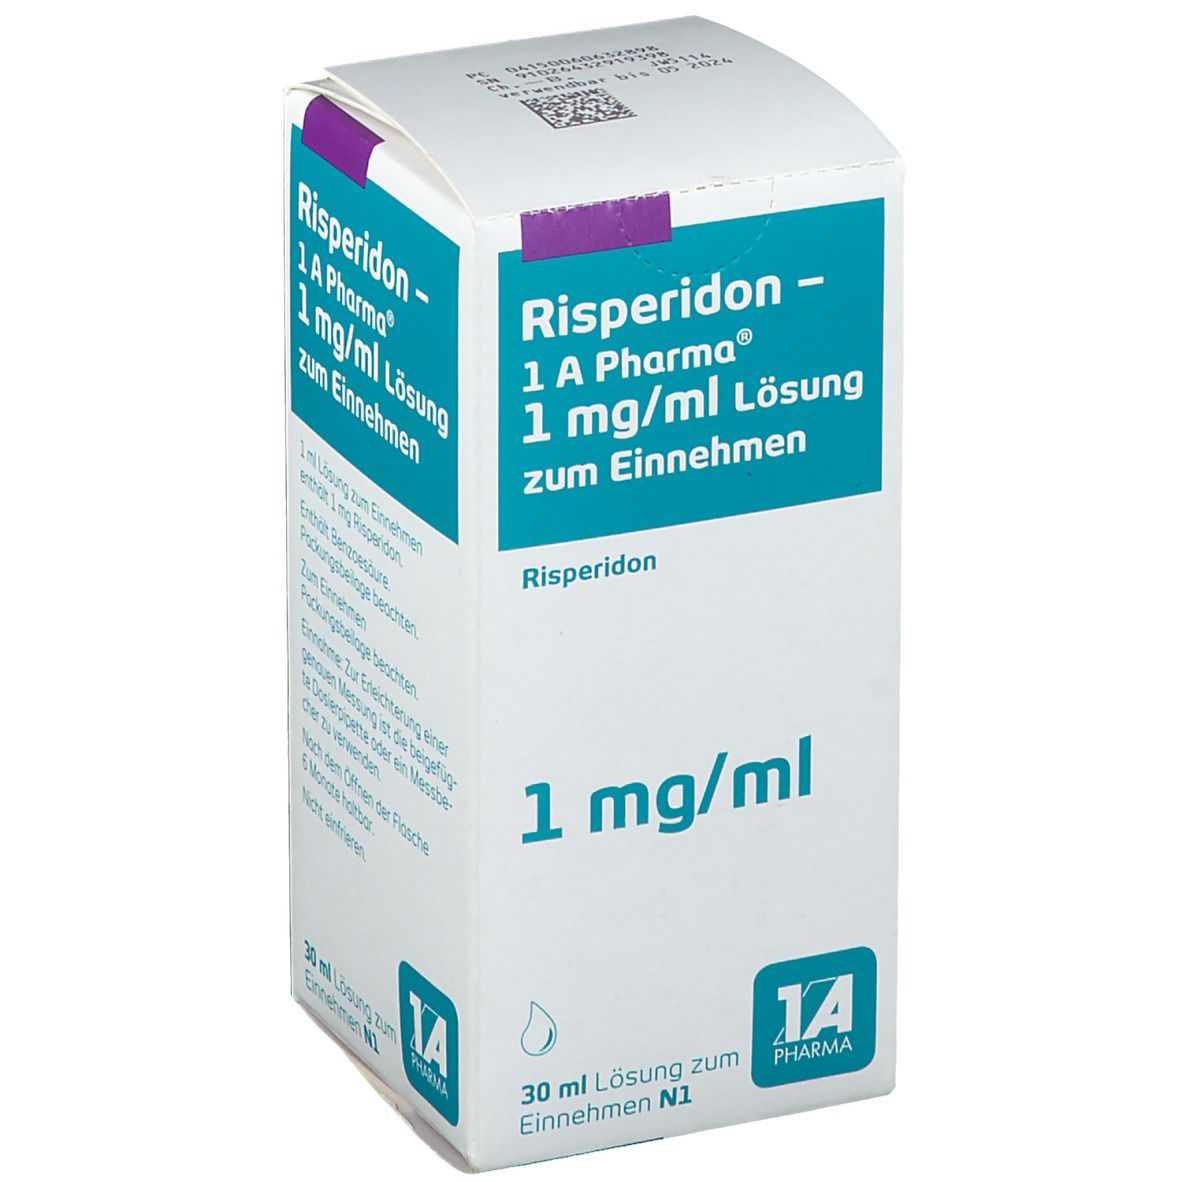 Risperidon - 1 A Pharma® 1 mg/ml Lösung